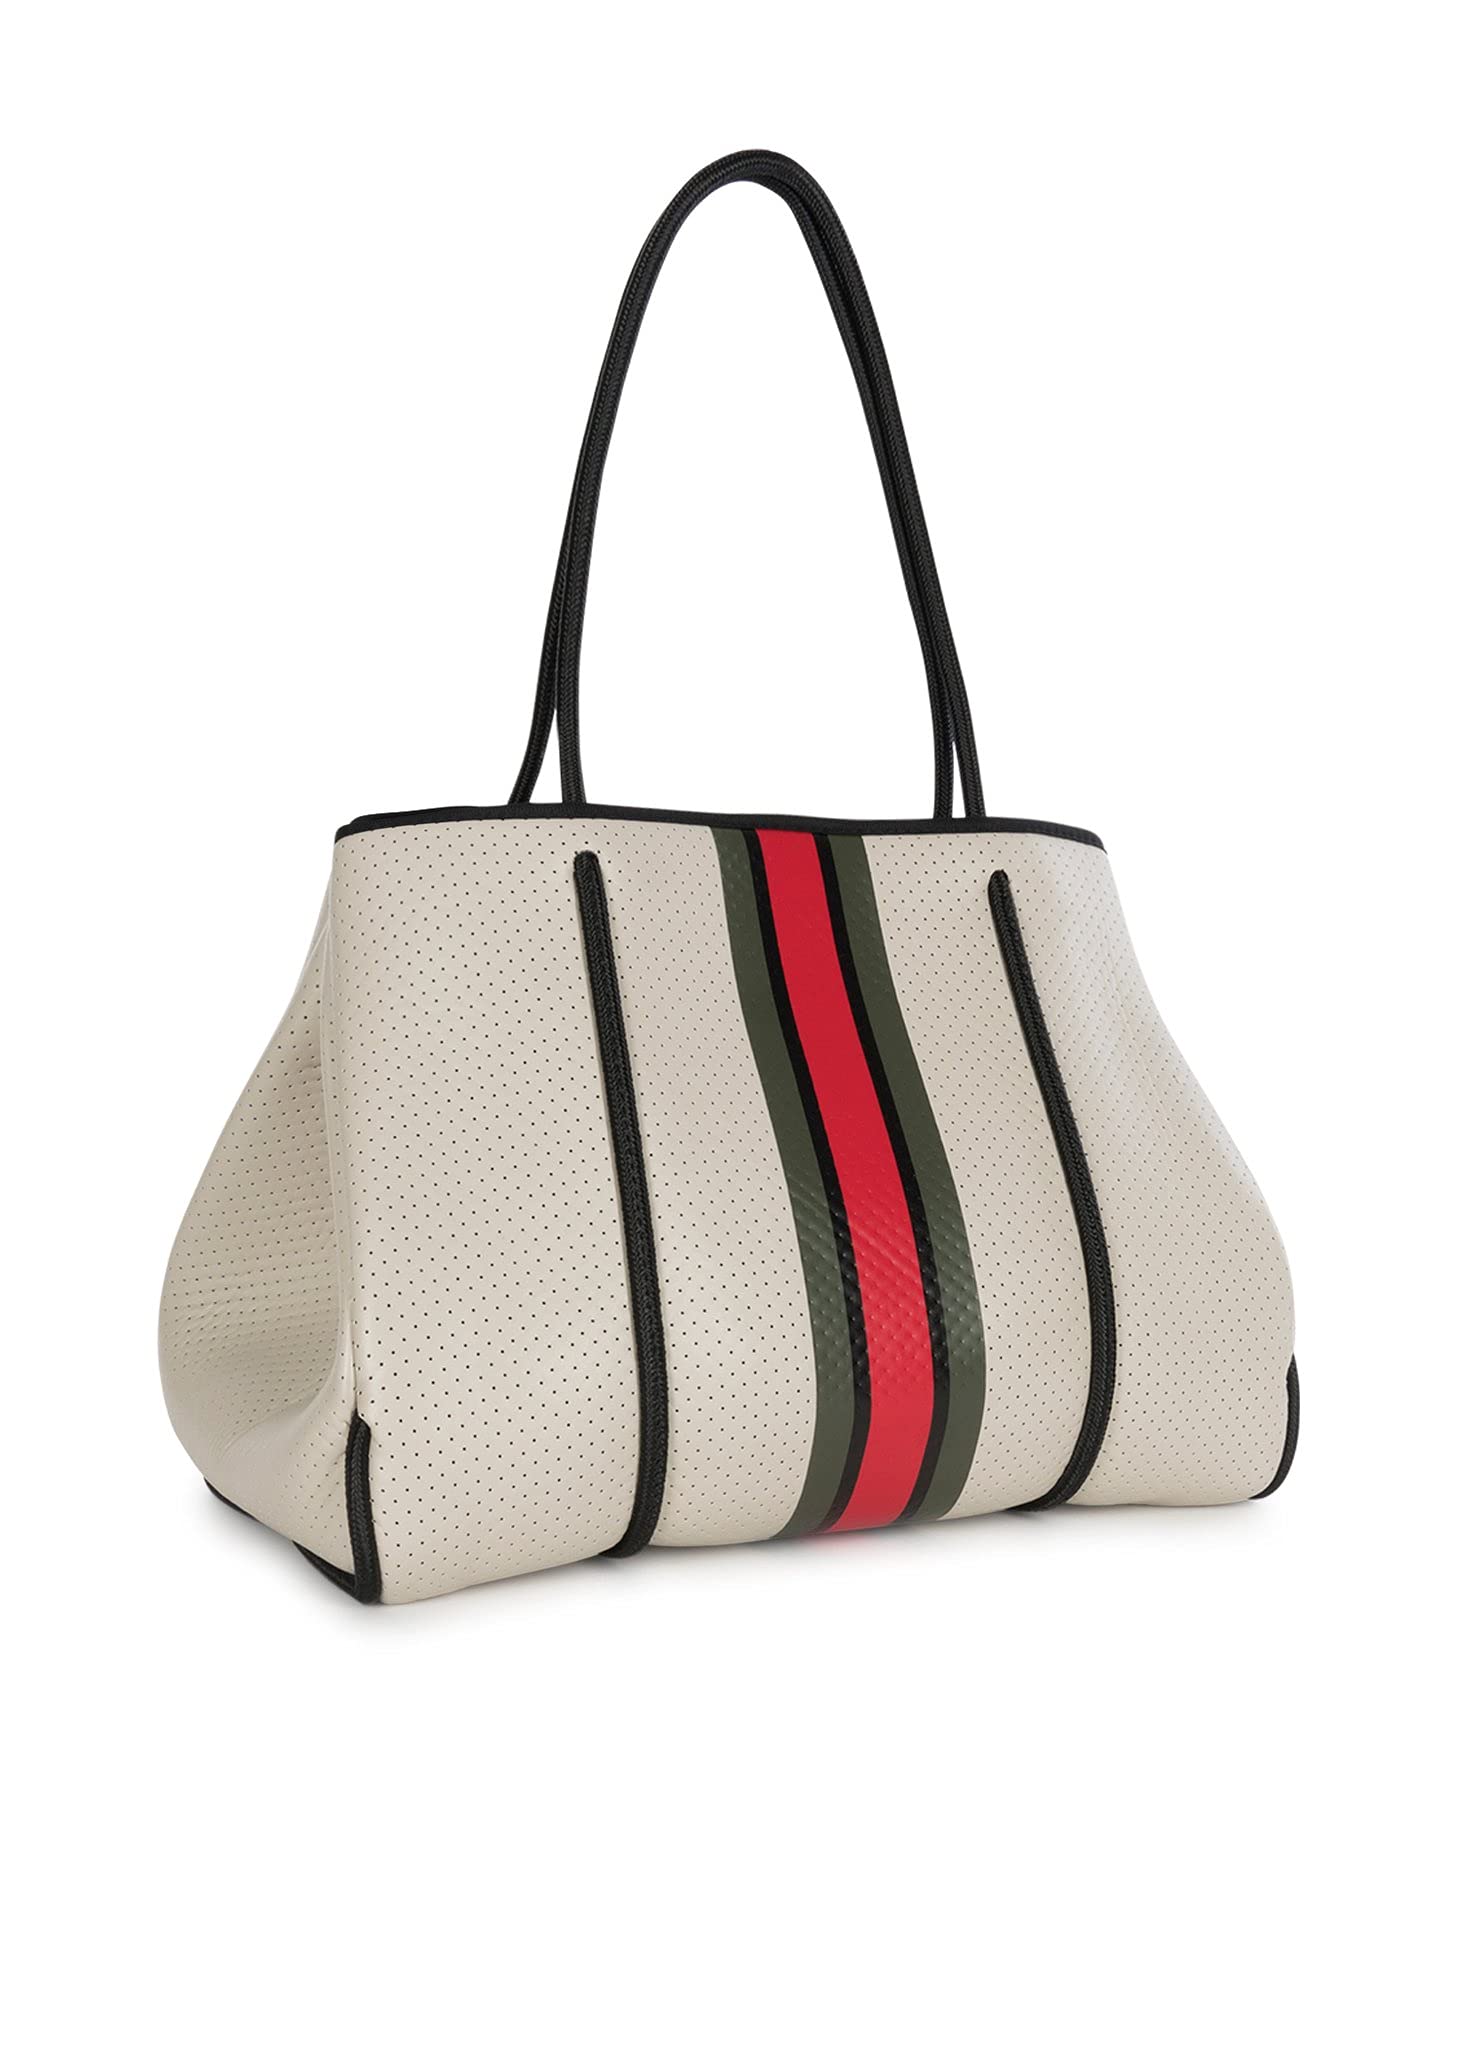 Haute Shore - Greyson Roma Neoprene Tote Bag w/Zipper Wristlet Inside, Beige W/Olive, Black, & Red Stripe